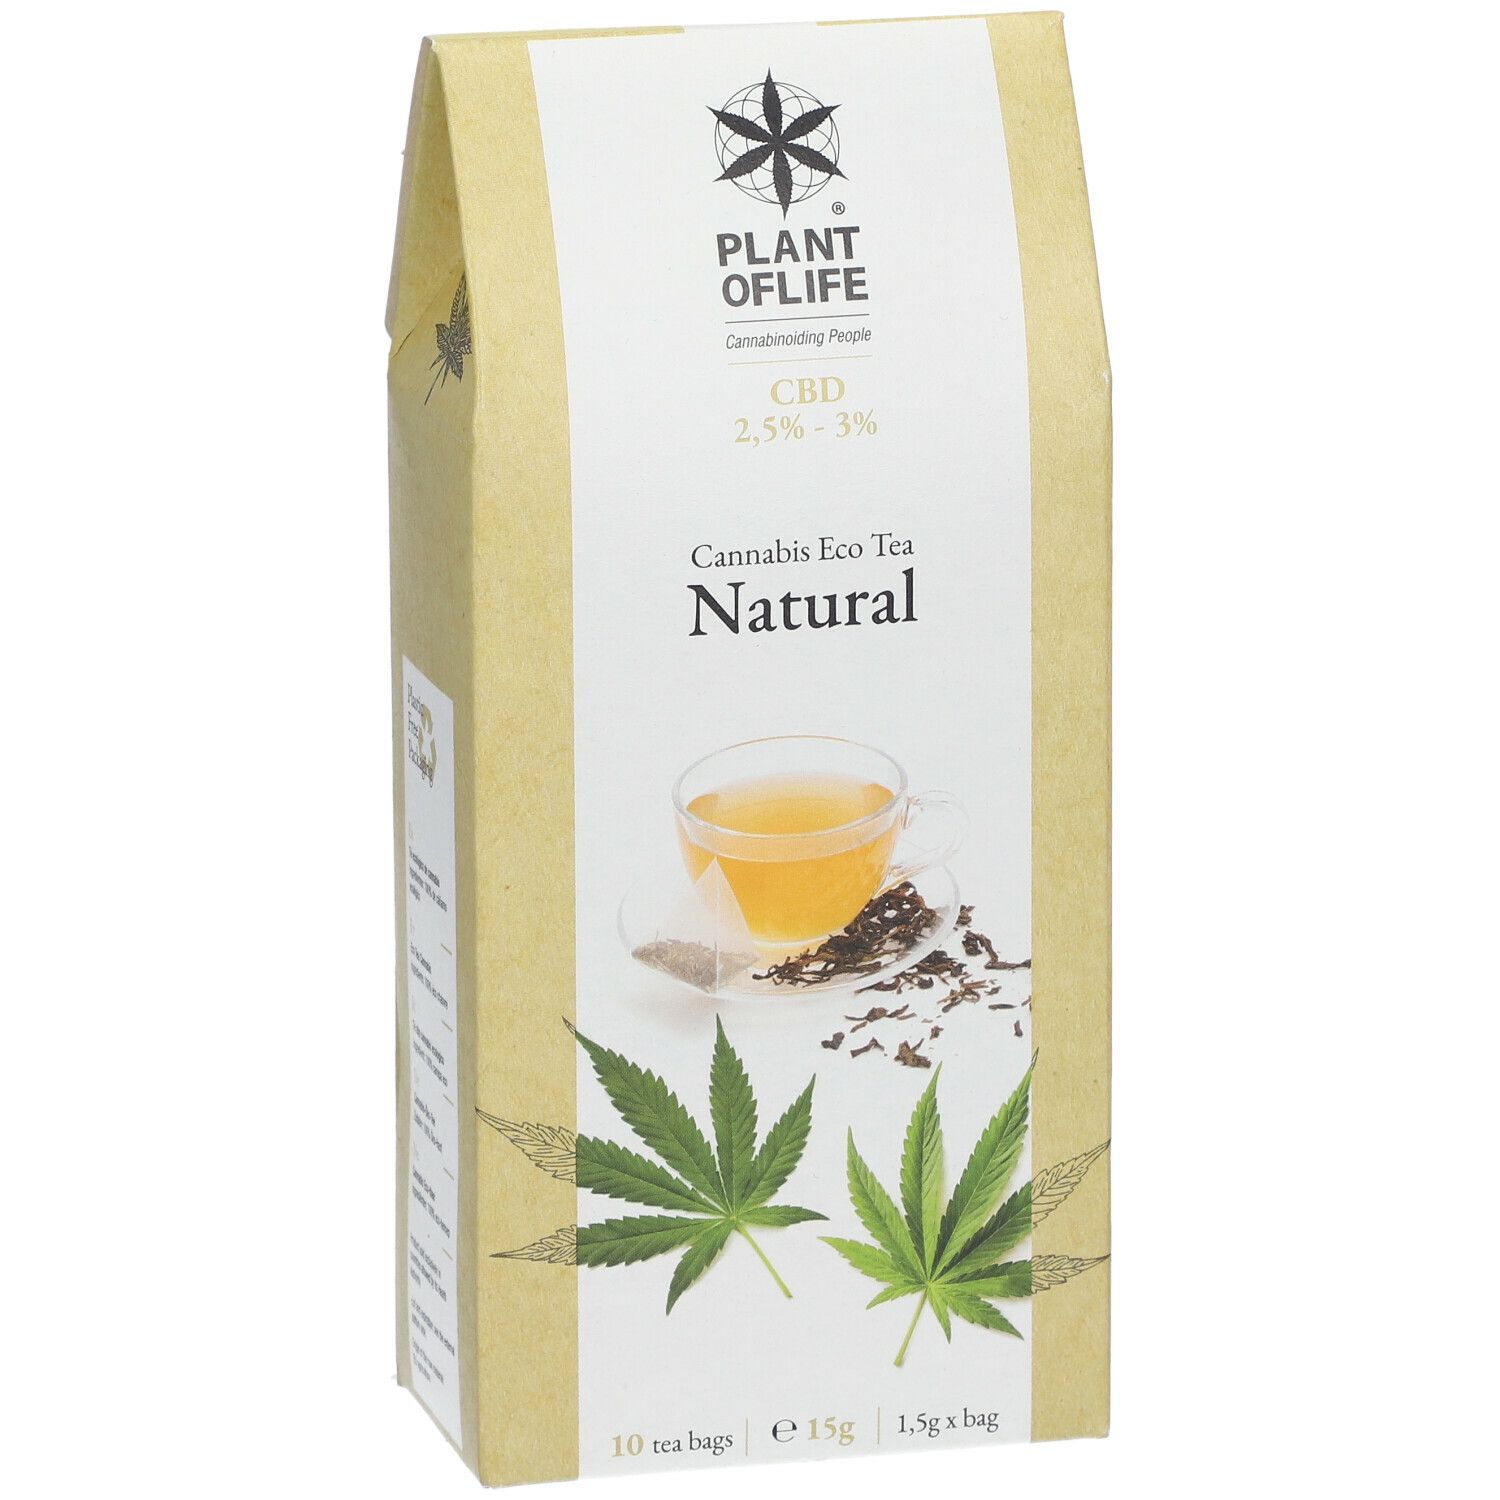 PLANTOFLIFE Cannabis Tea Natural